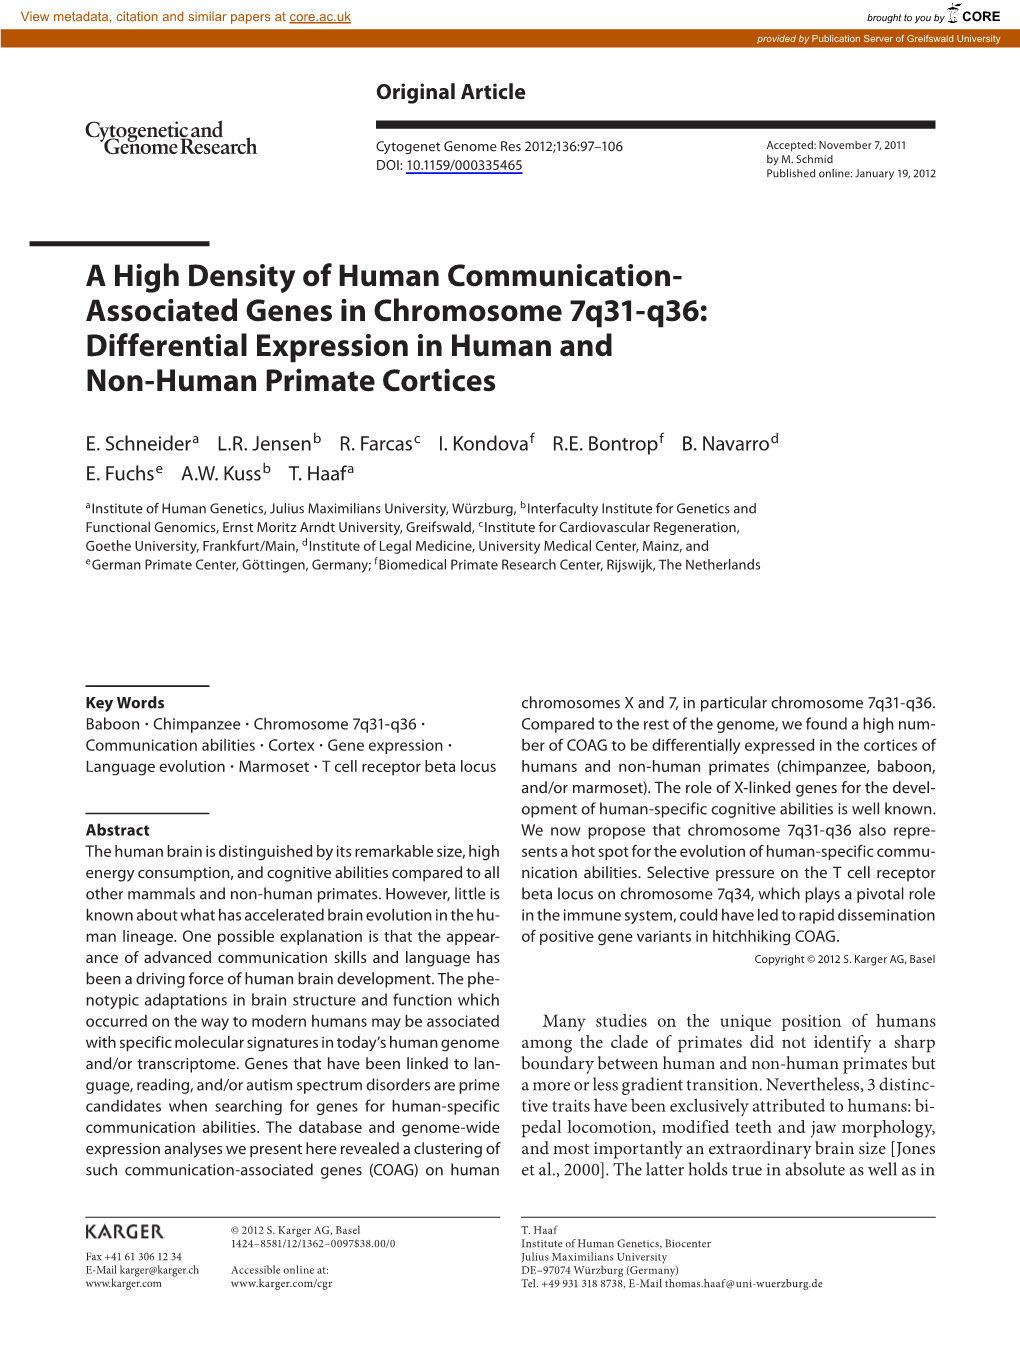 A High Density of Human Communication-Associated